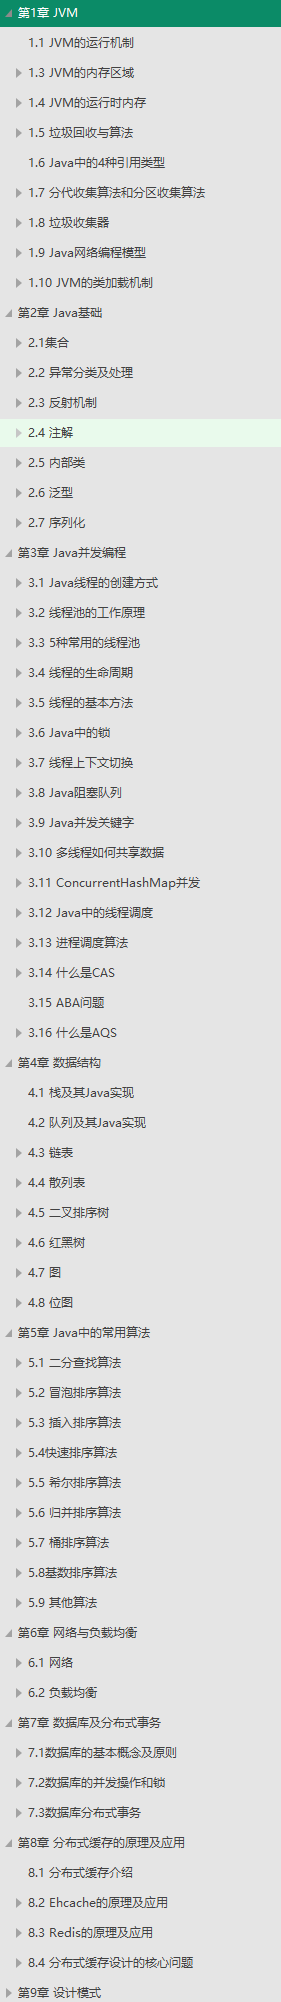 Cool!  Collection de base Java de Tencent T4 (framework + principe + notes + carte)